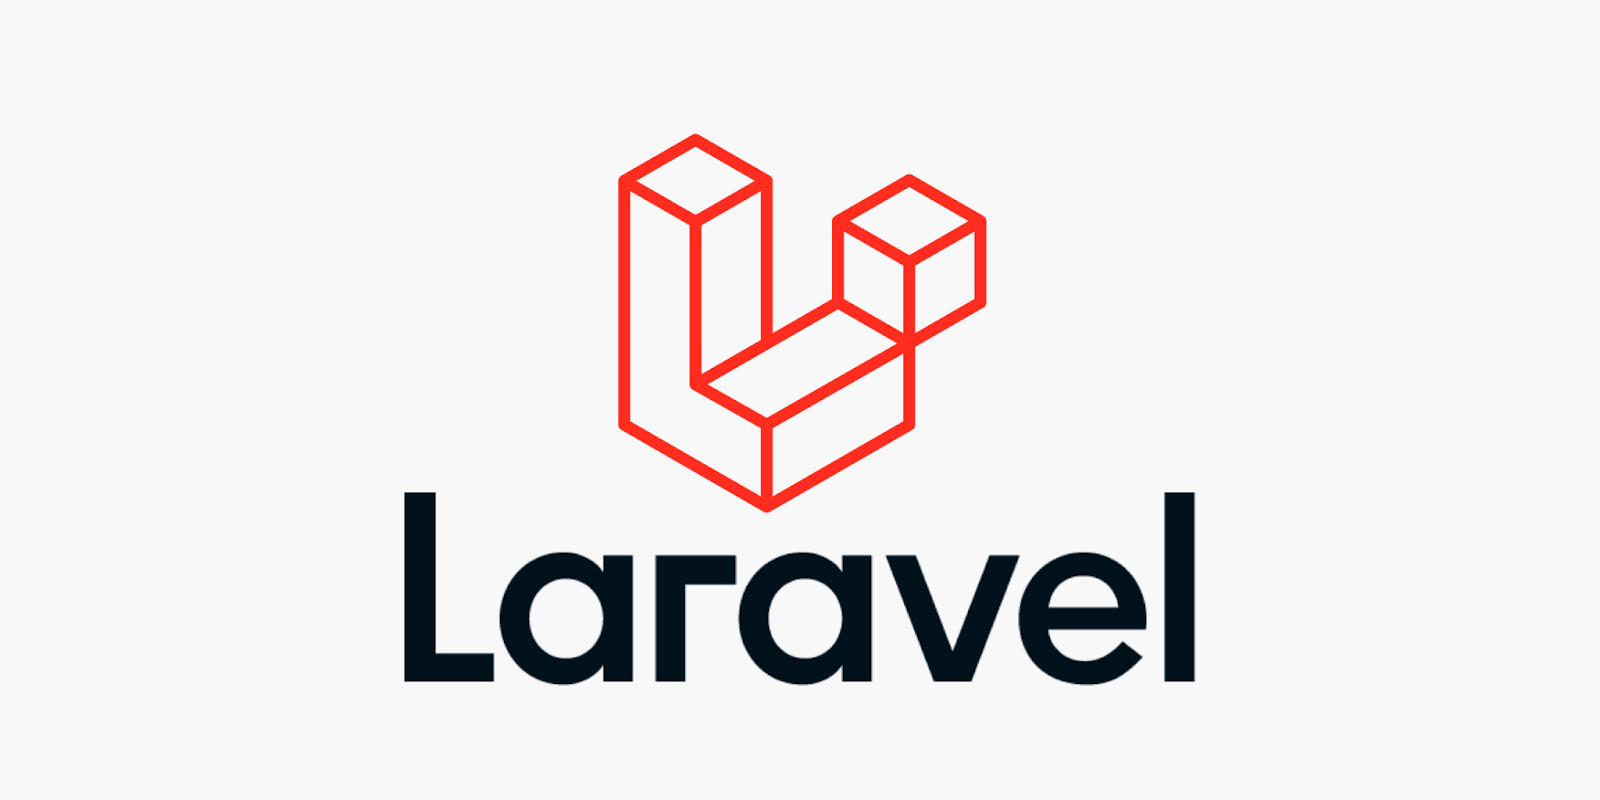 Le logo Laravel.